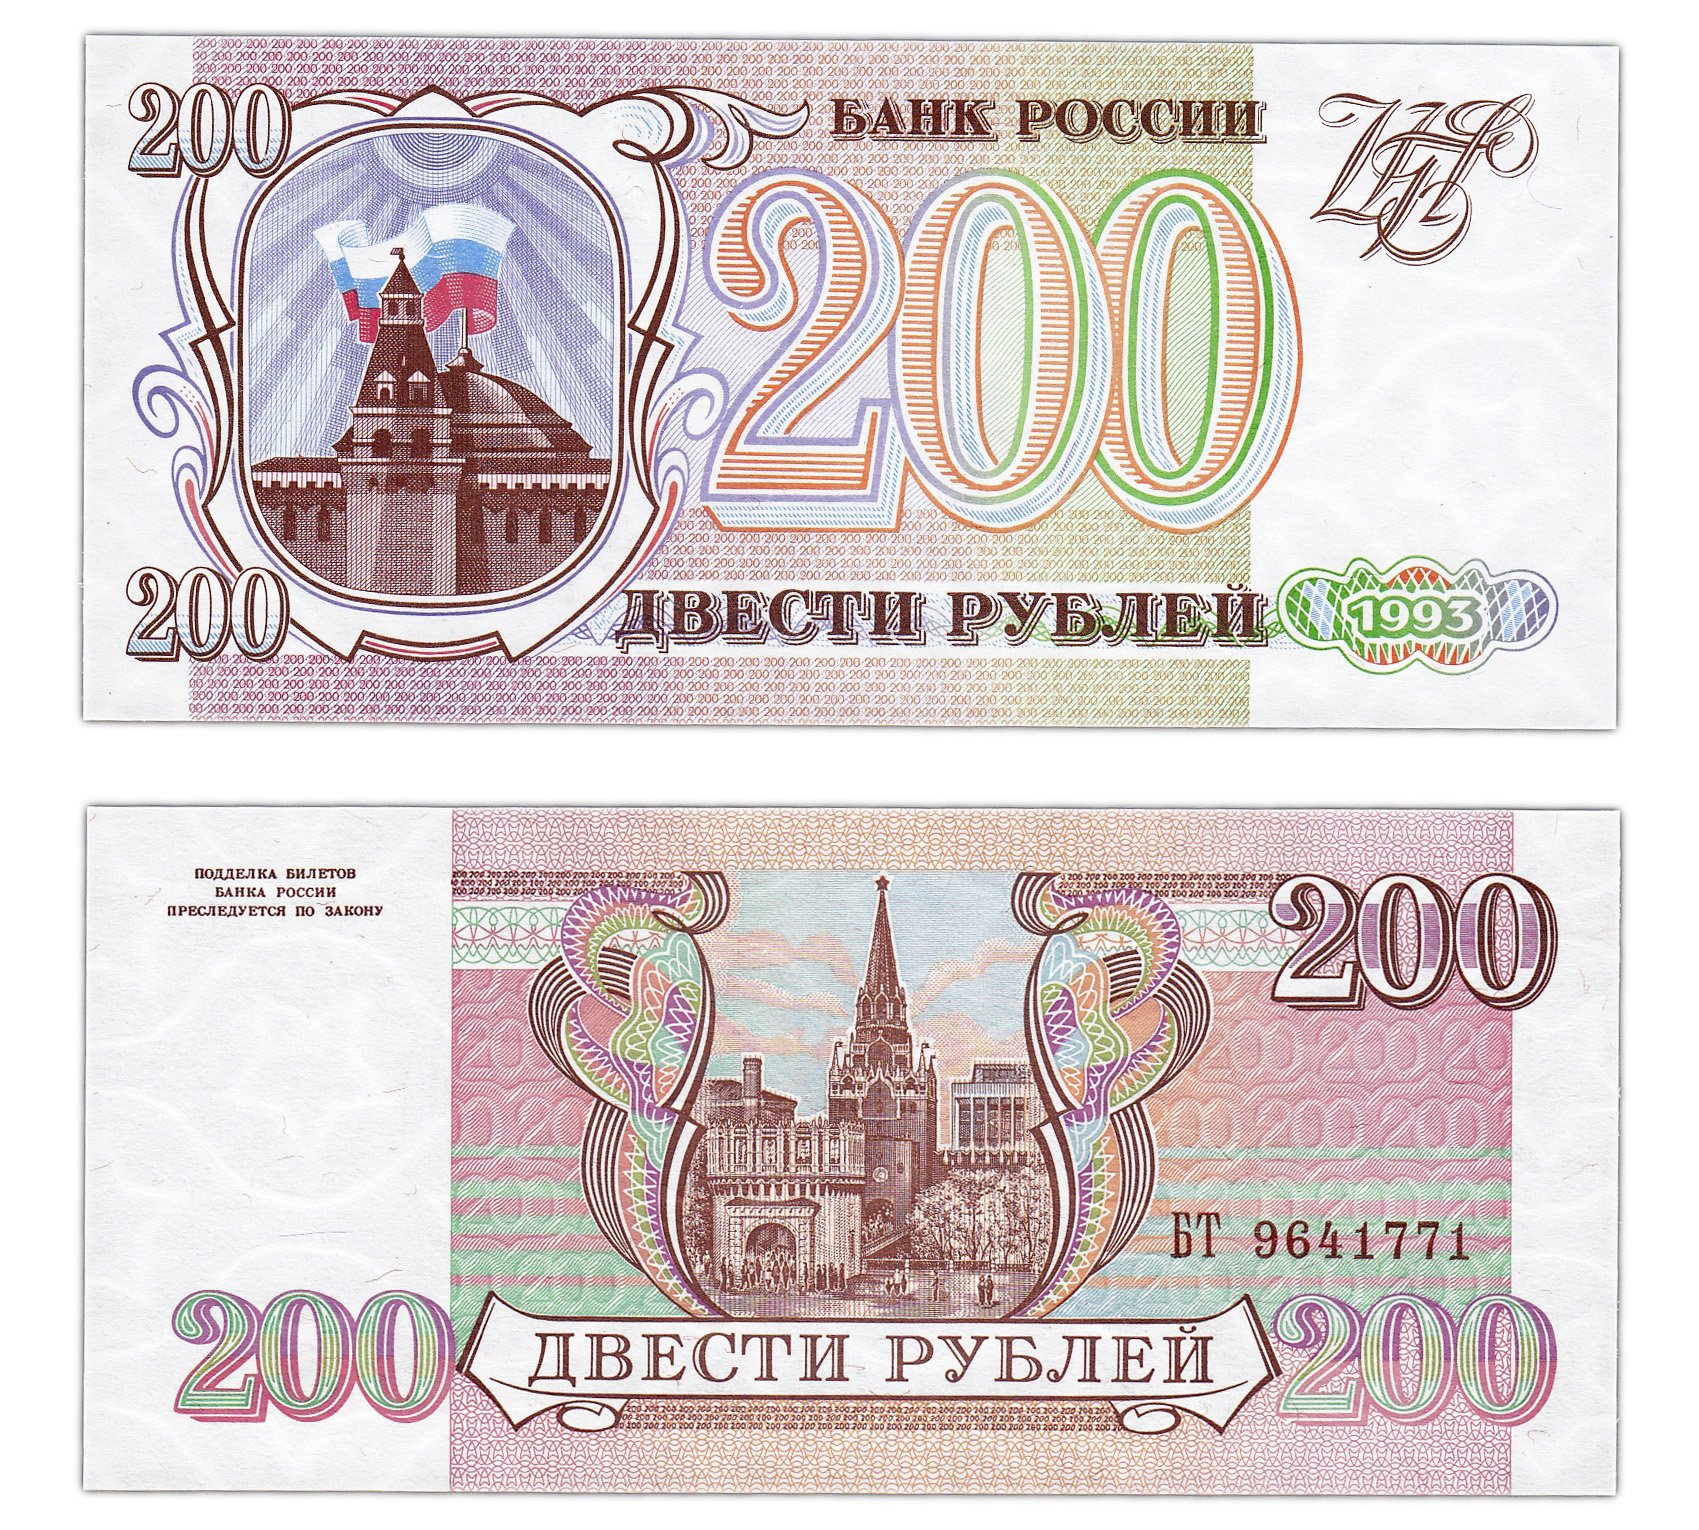 200 руб купюра. Банкнота 200 рублей 1993. 200 Рублей 1993 года. Купюра 200 рублей 1993. Купюра 200 рублей 1993 года.